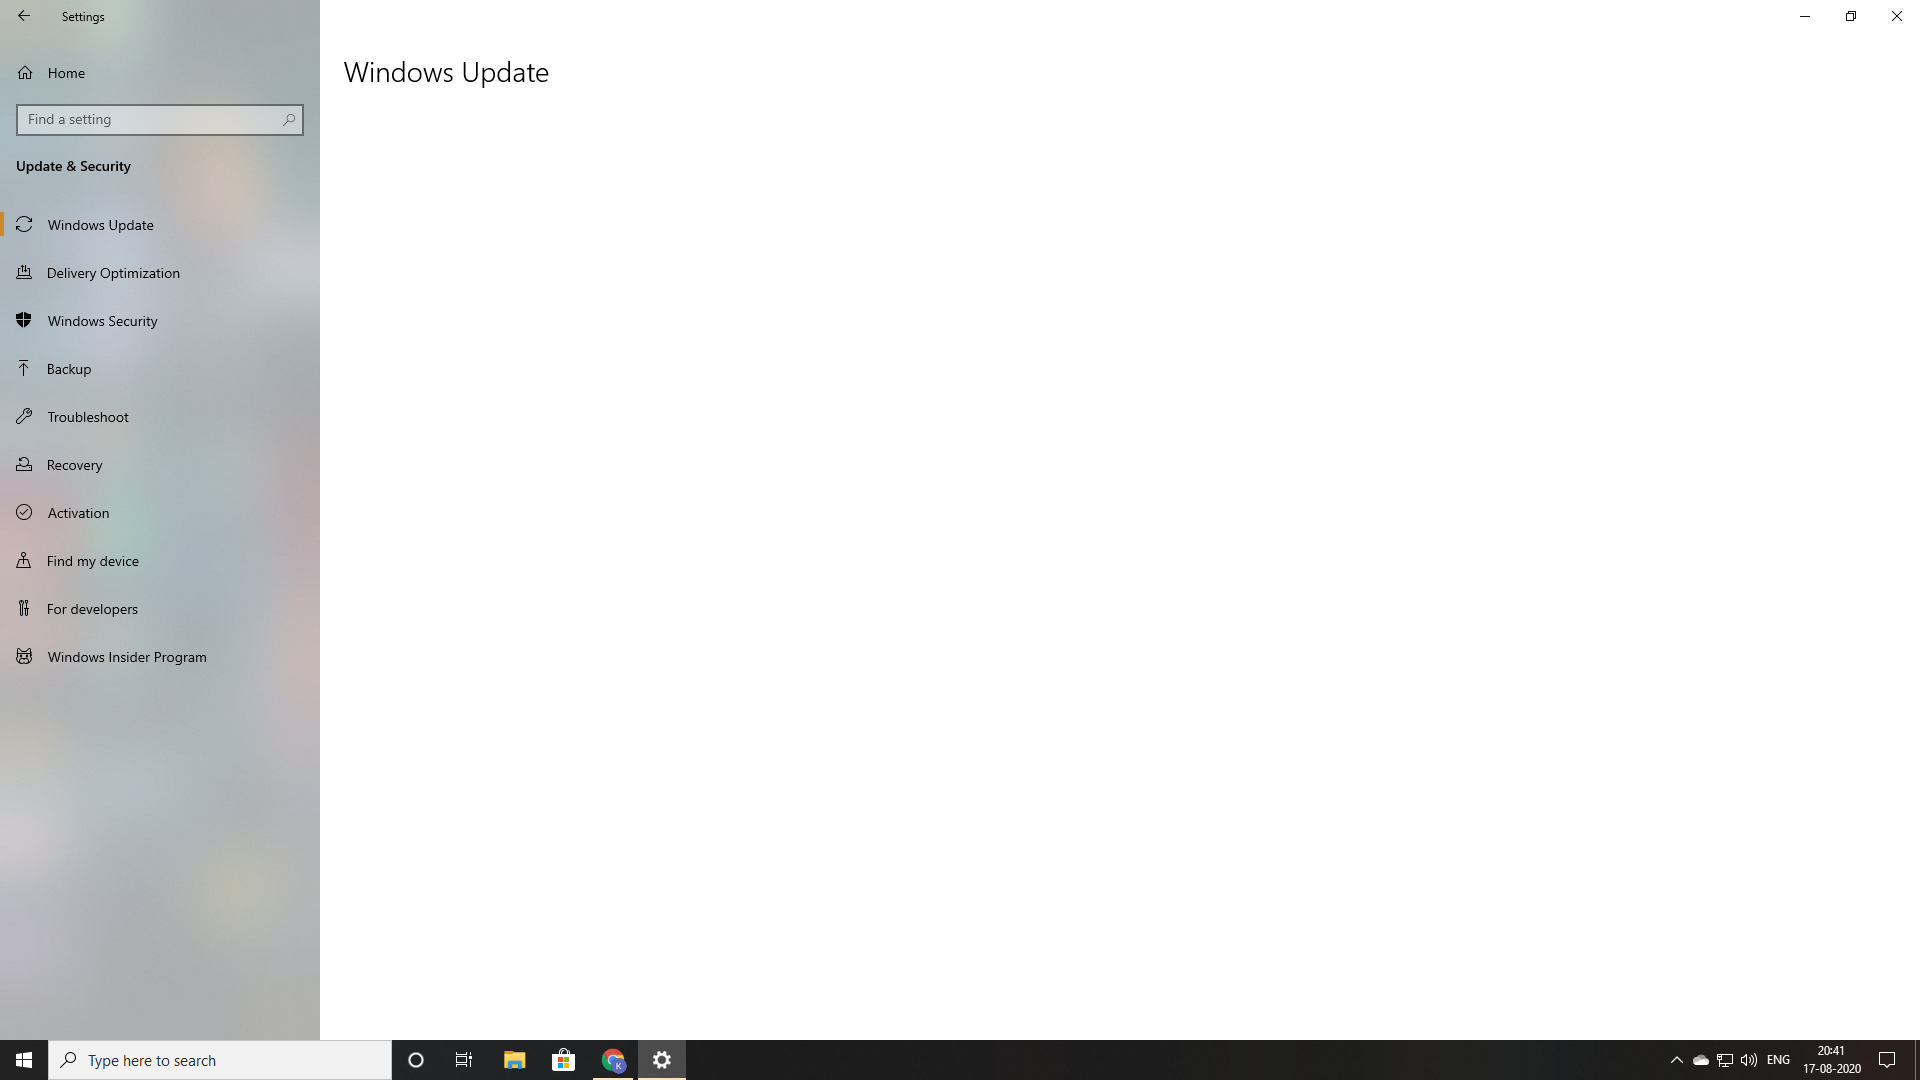 Windows Update Problems e62c44cc-5534-4566-a7d4-86c72aad79f5?upload=true.png